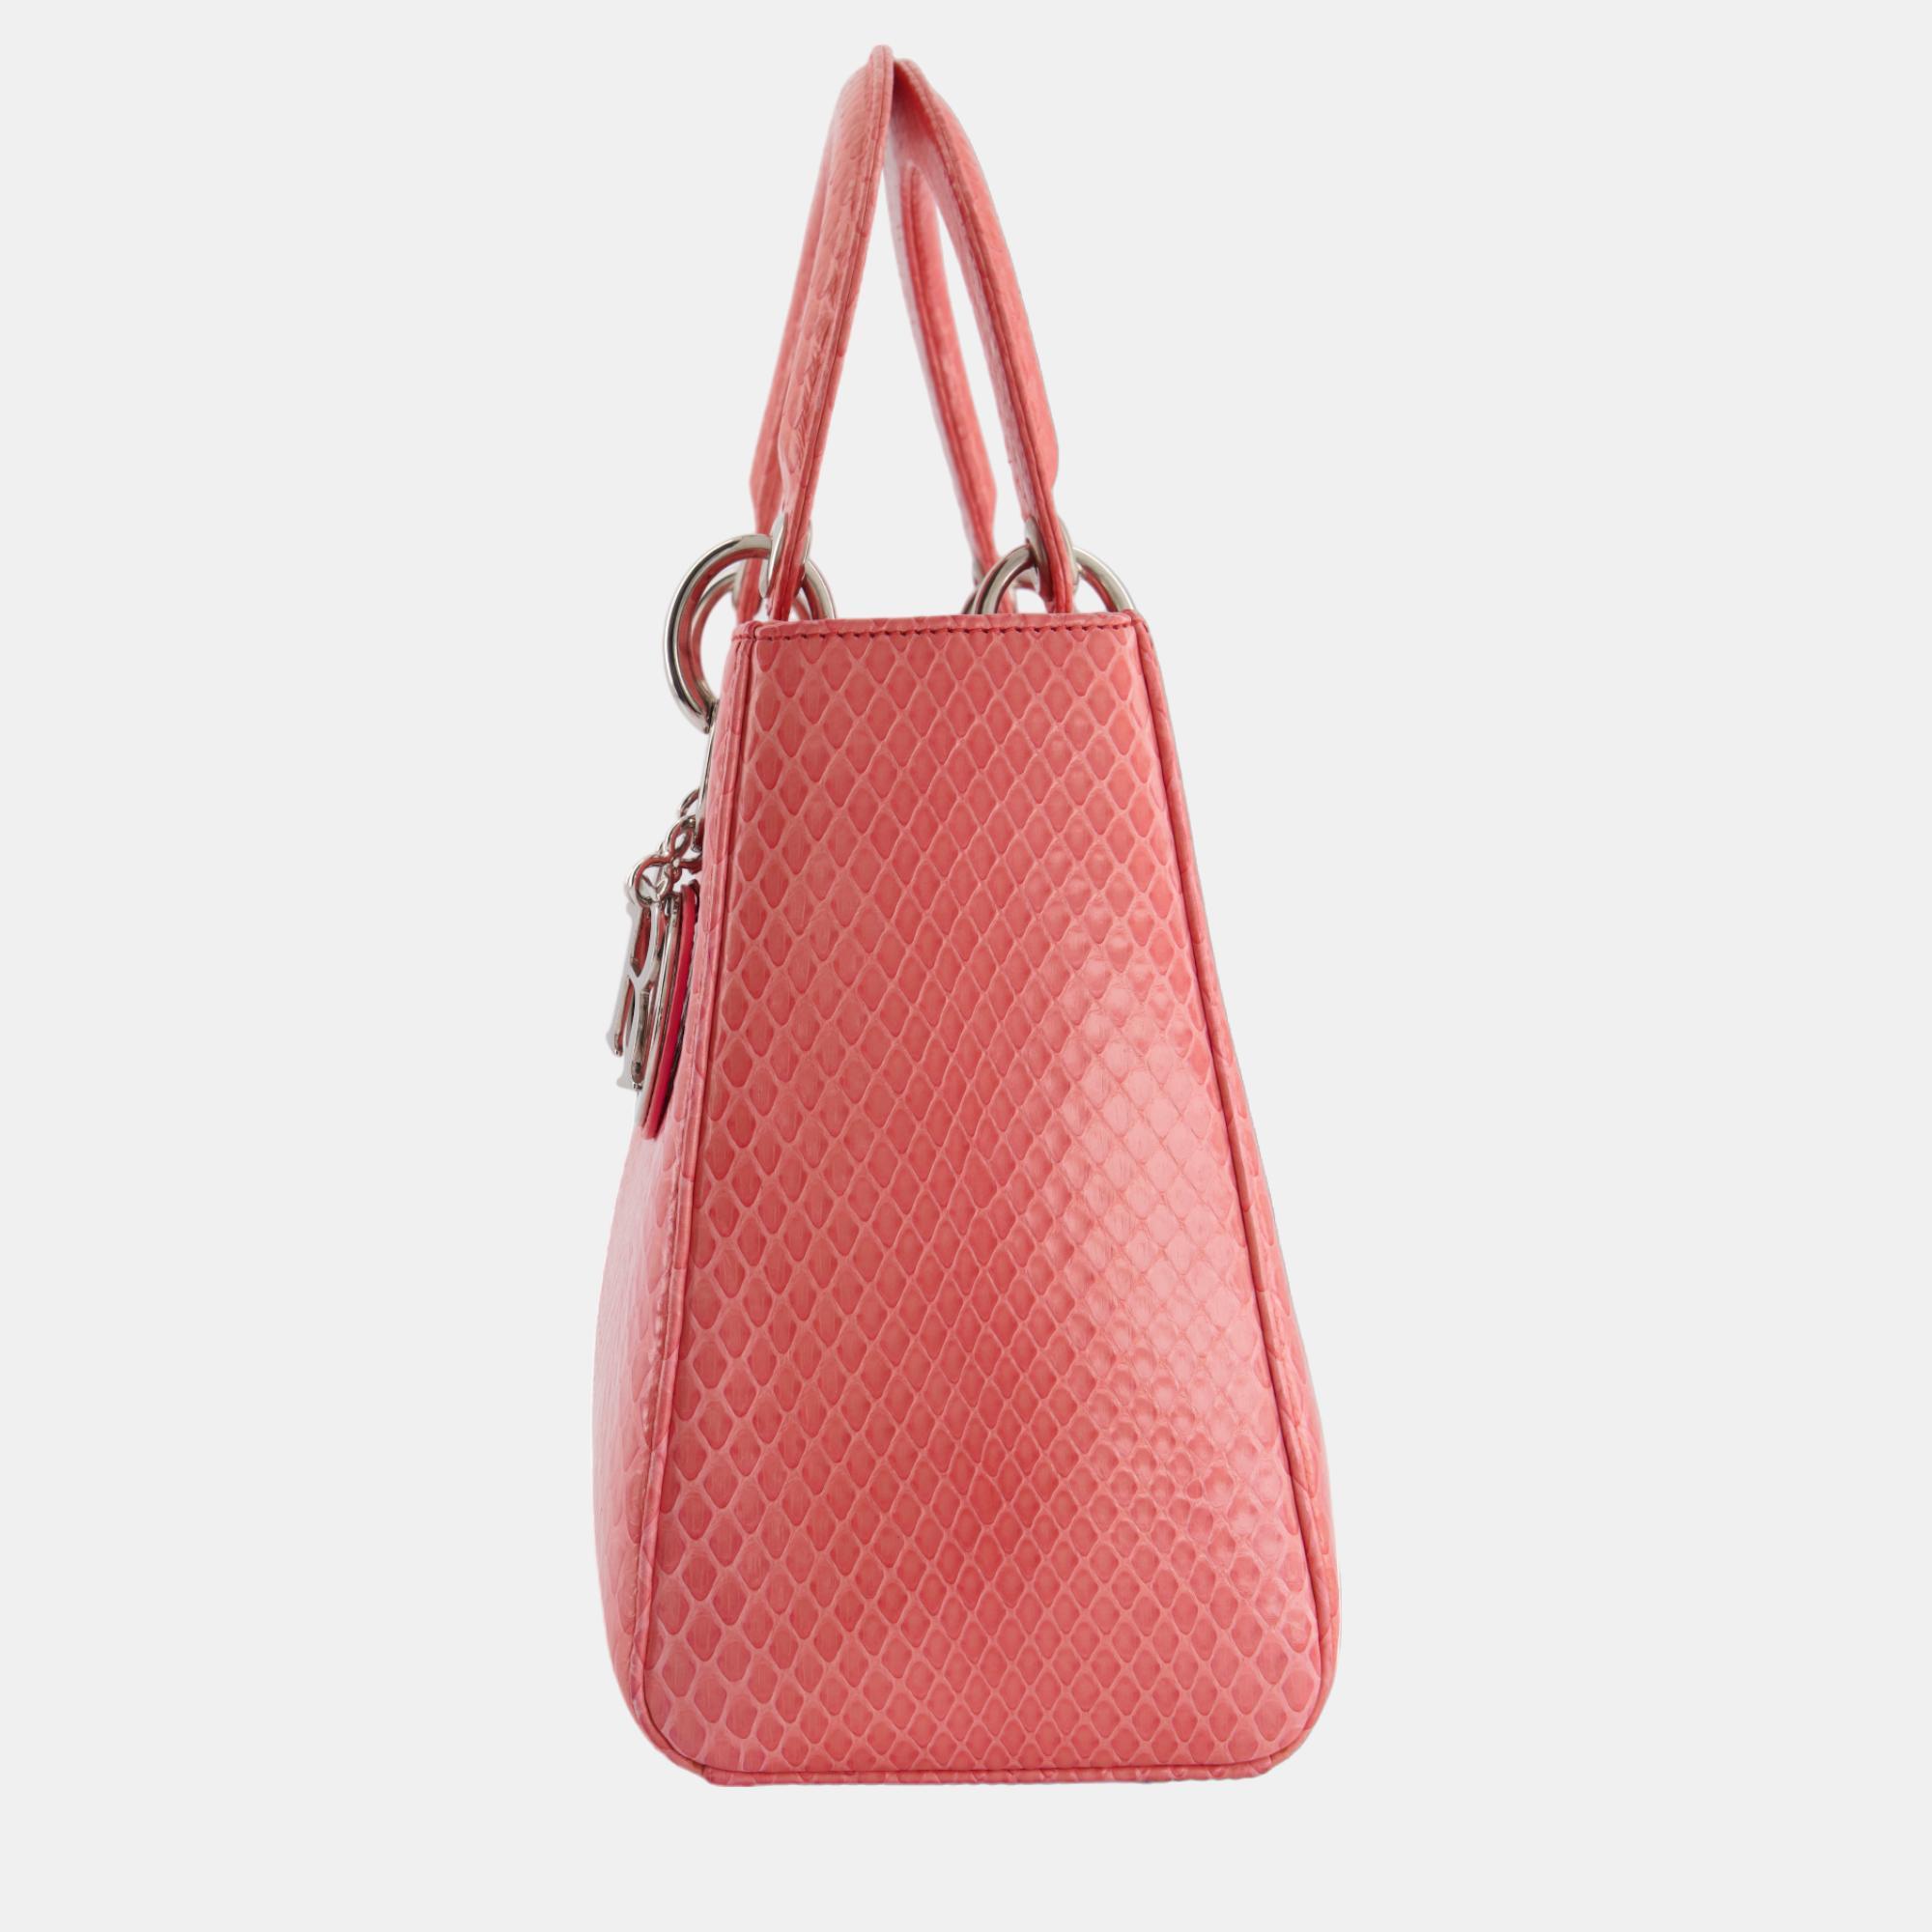 Christian Dior Medium Coral Python Lady Dior Bag With Silver Hardware